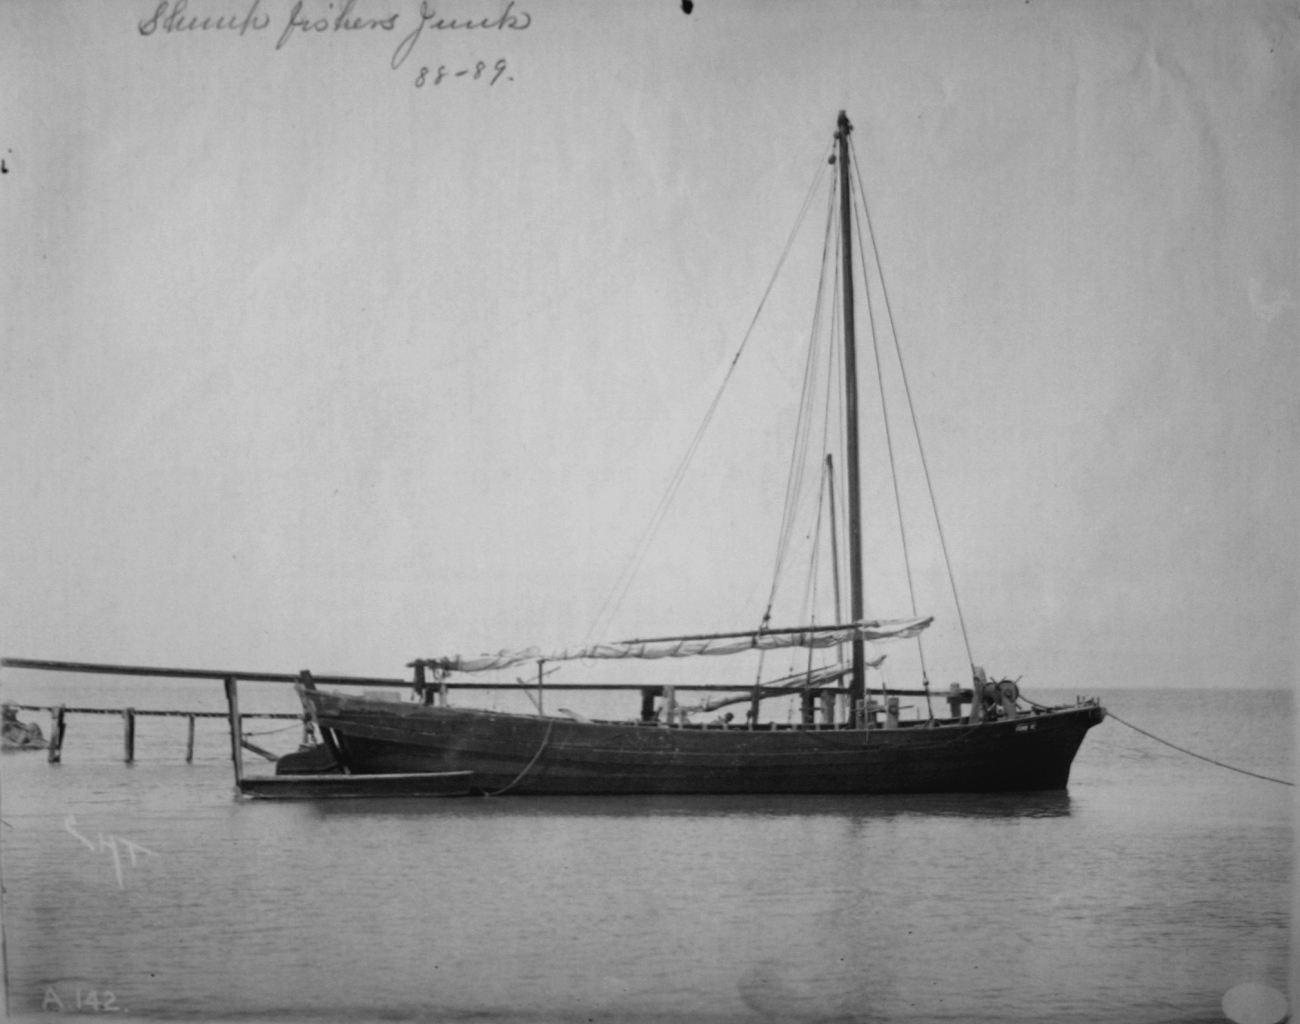 Shrimp fishers junk, 1888-89